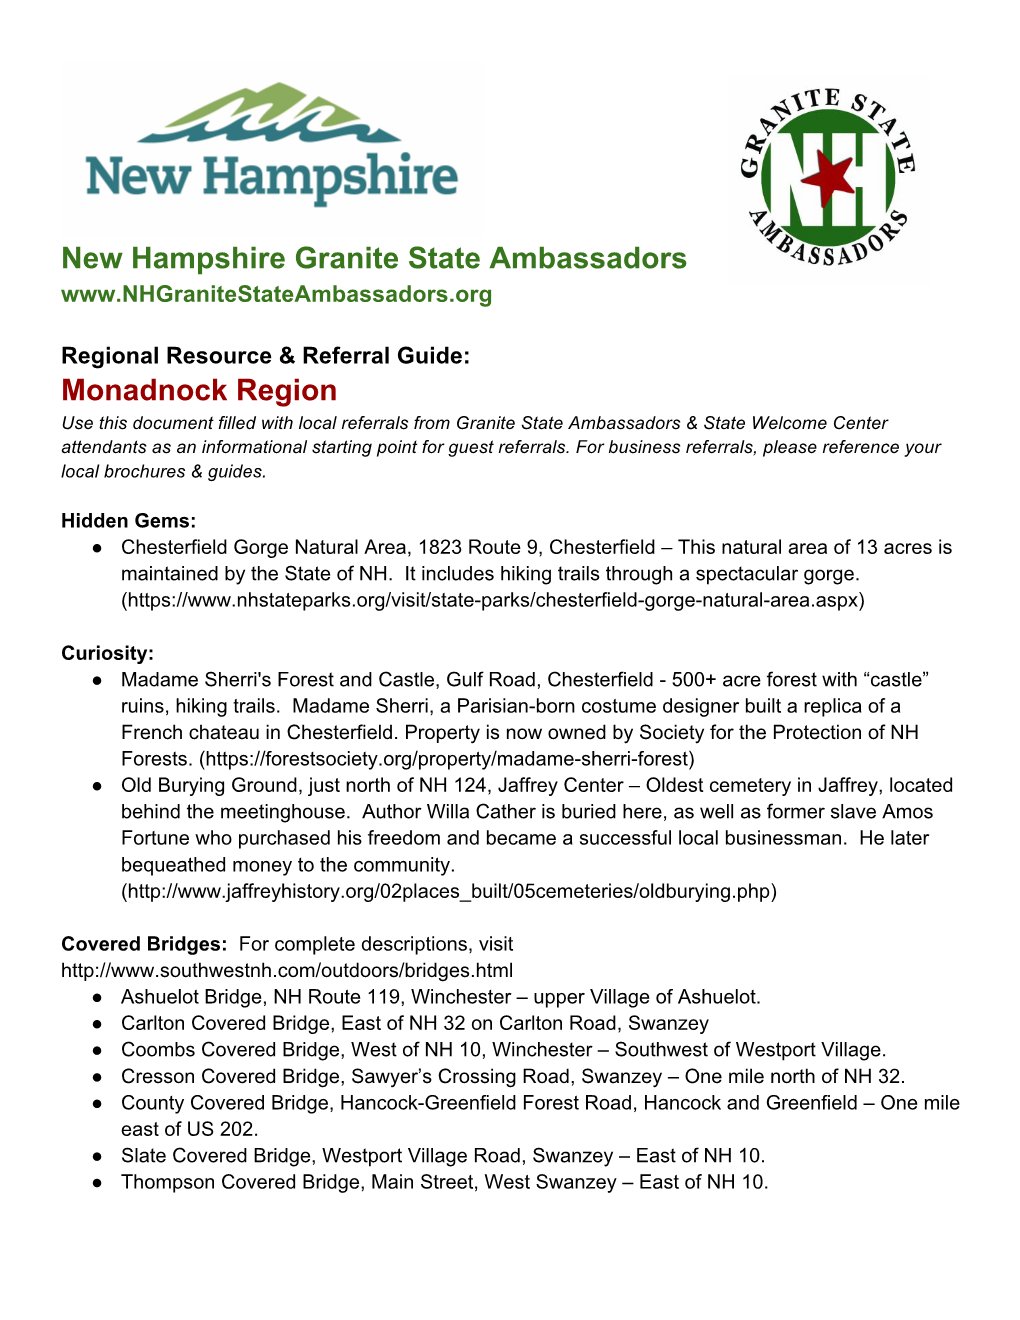 New Hampshire Granite State Ambassadors Monadnock Region